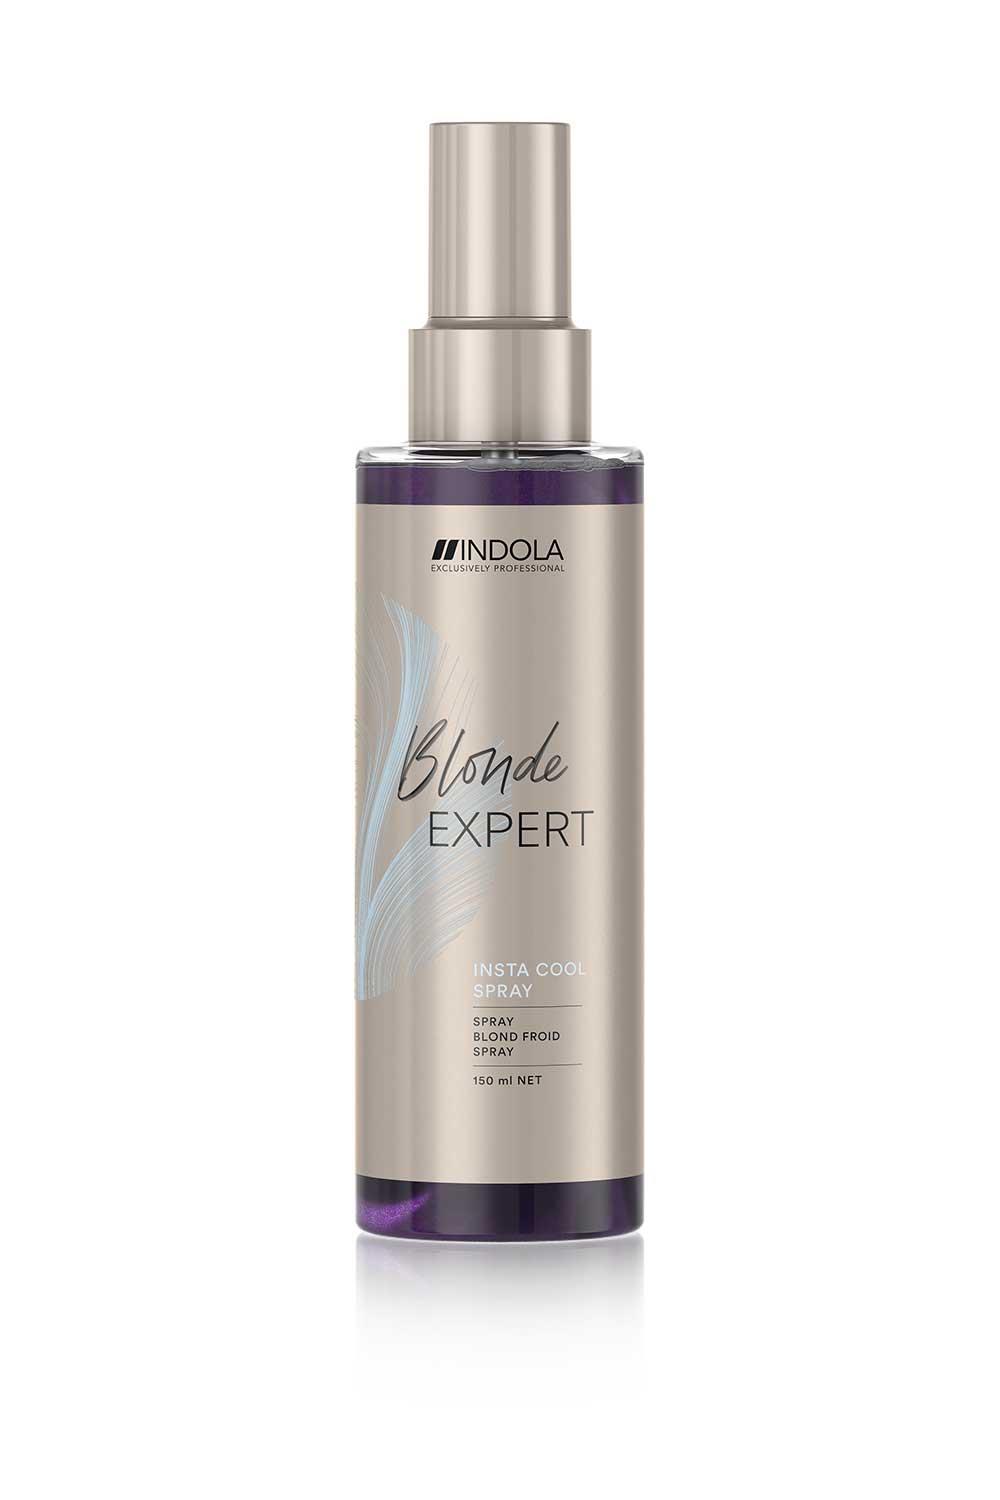  Blonde Expert Spray Inda Cool, Indola